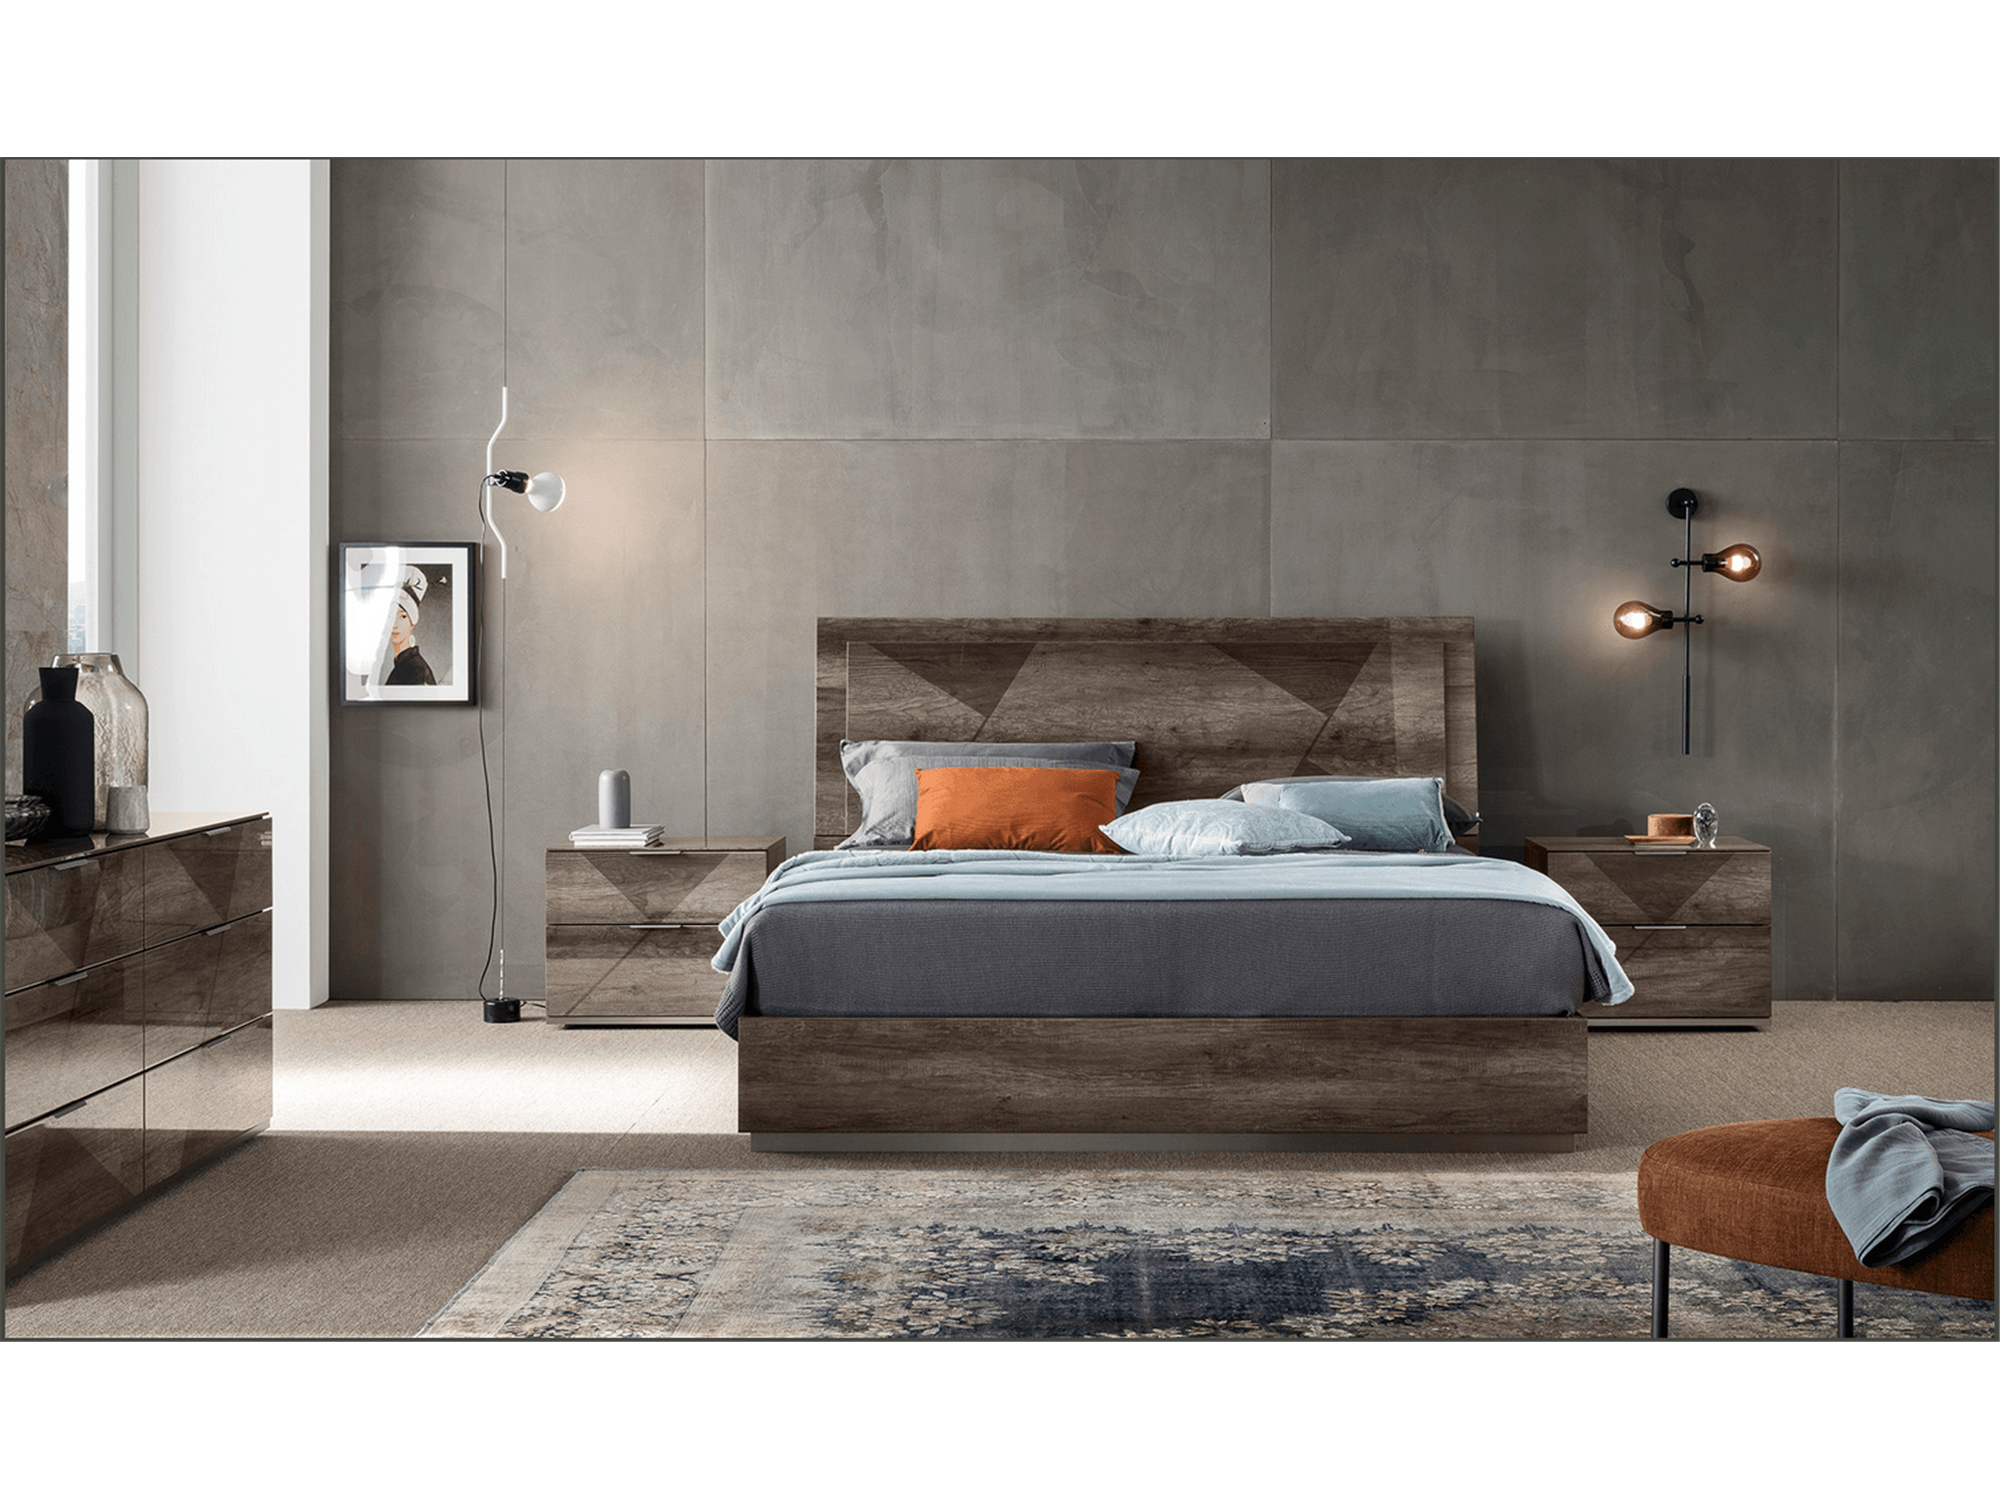 Favi Bedroom Collection - Euro Living Furniture